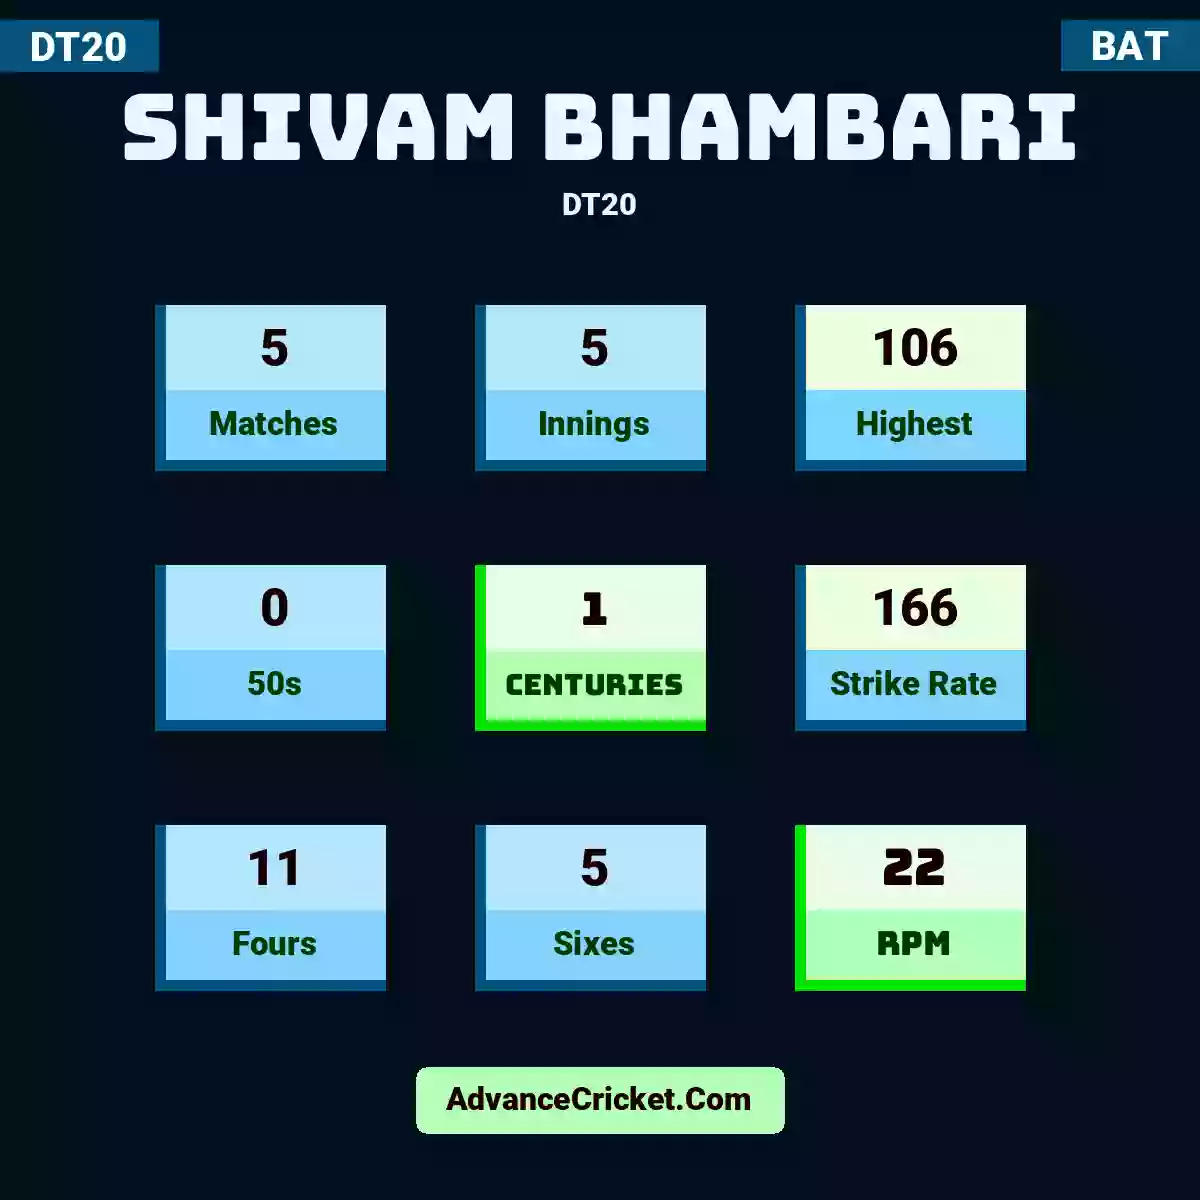 Shivam Bhambari DT20 , Shivam Bhambari played 5 matches, scored 106 runs as highest, 0 half-centuries, and 1 centuries, with a strike rate of 166. S.Bhambari hit 11 fours and 5 sixes, with an RPM of 22.